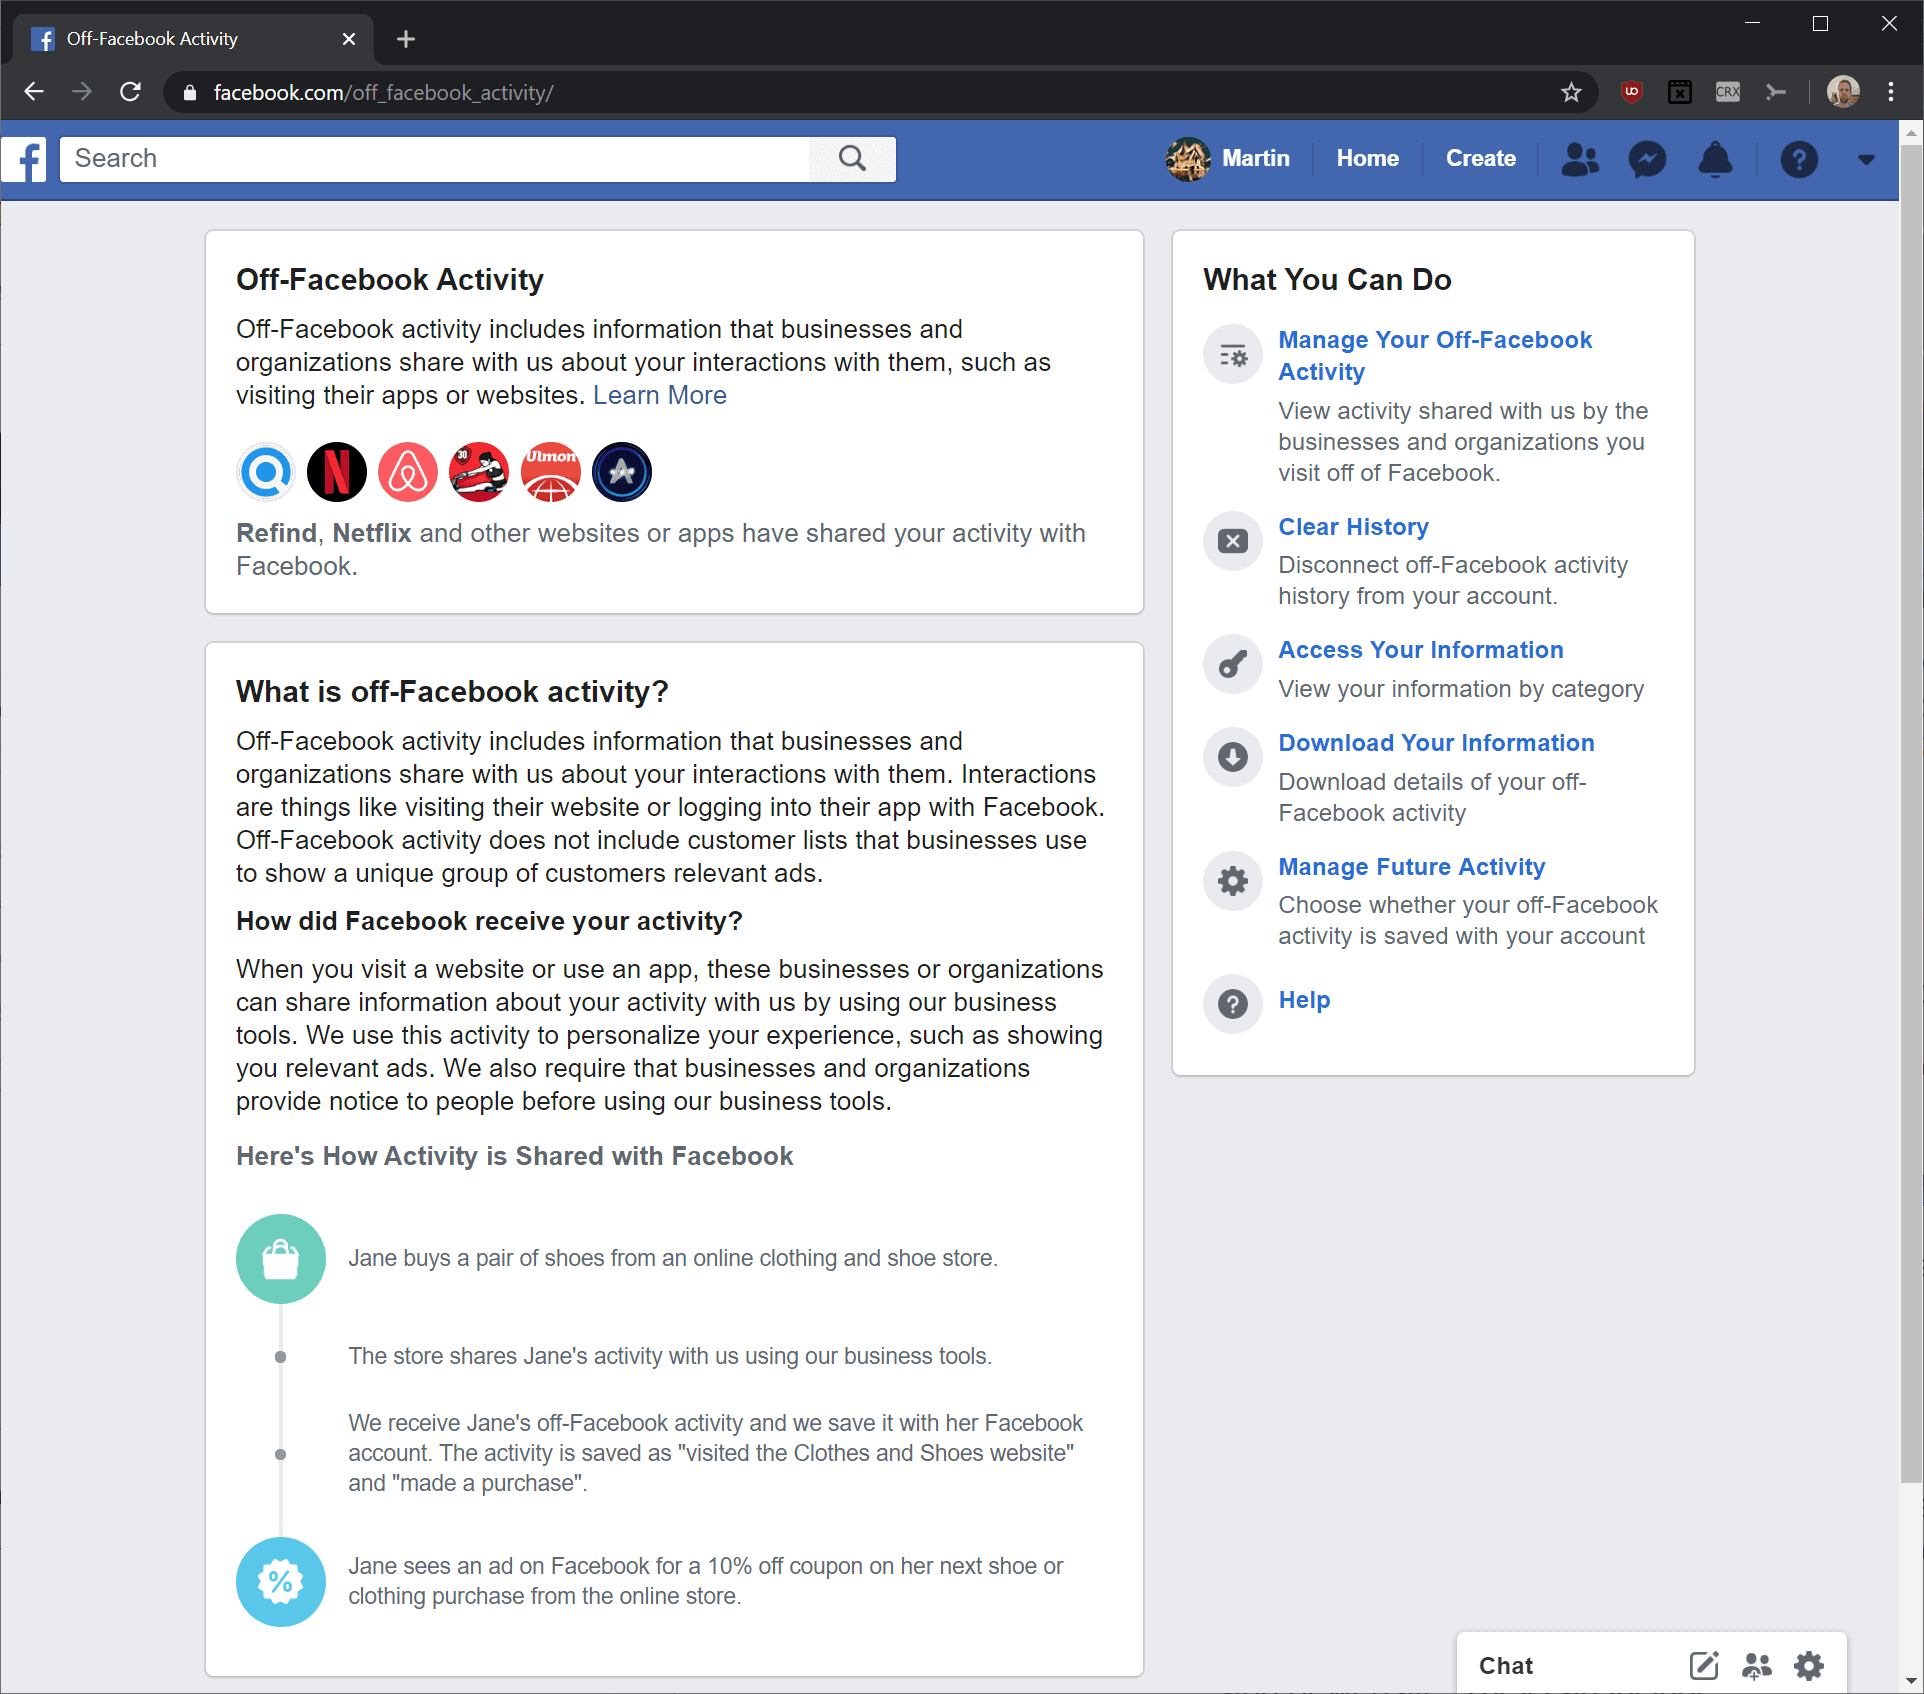 off-facebook activity page